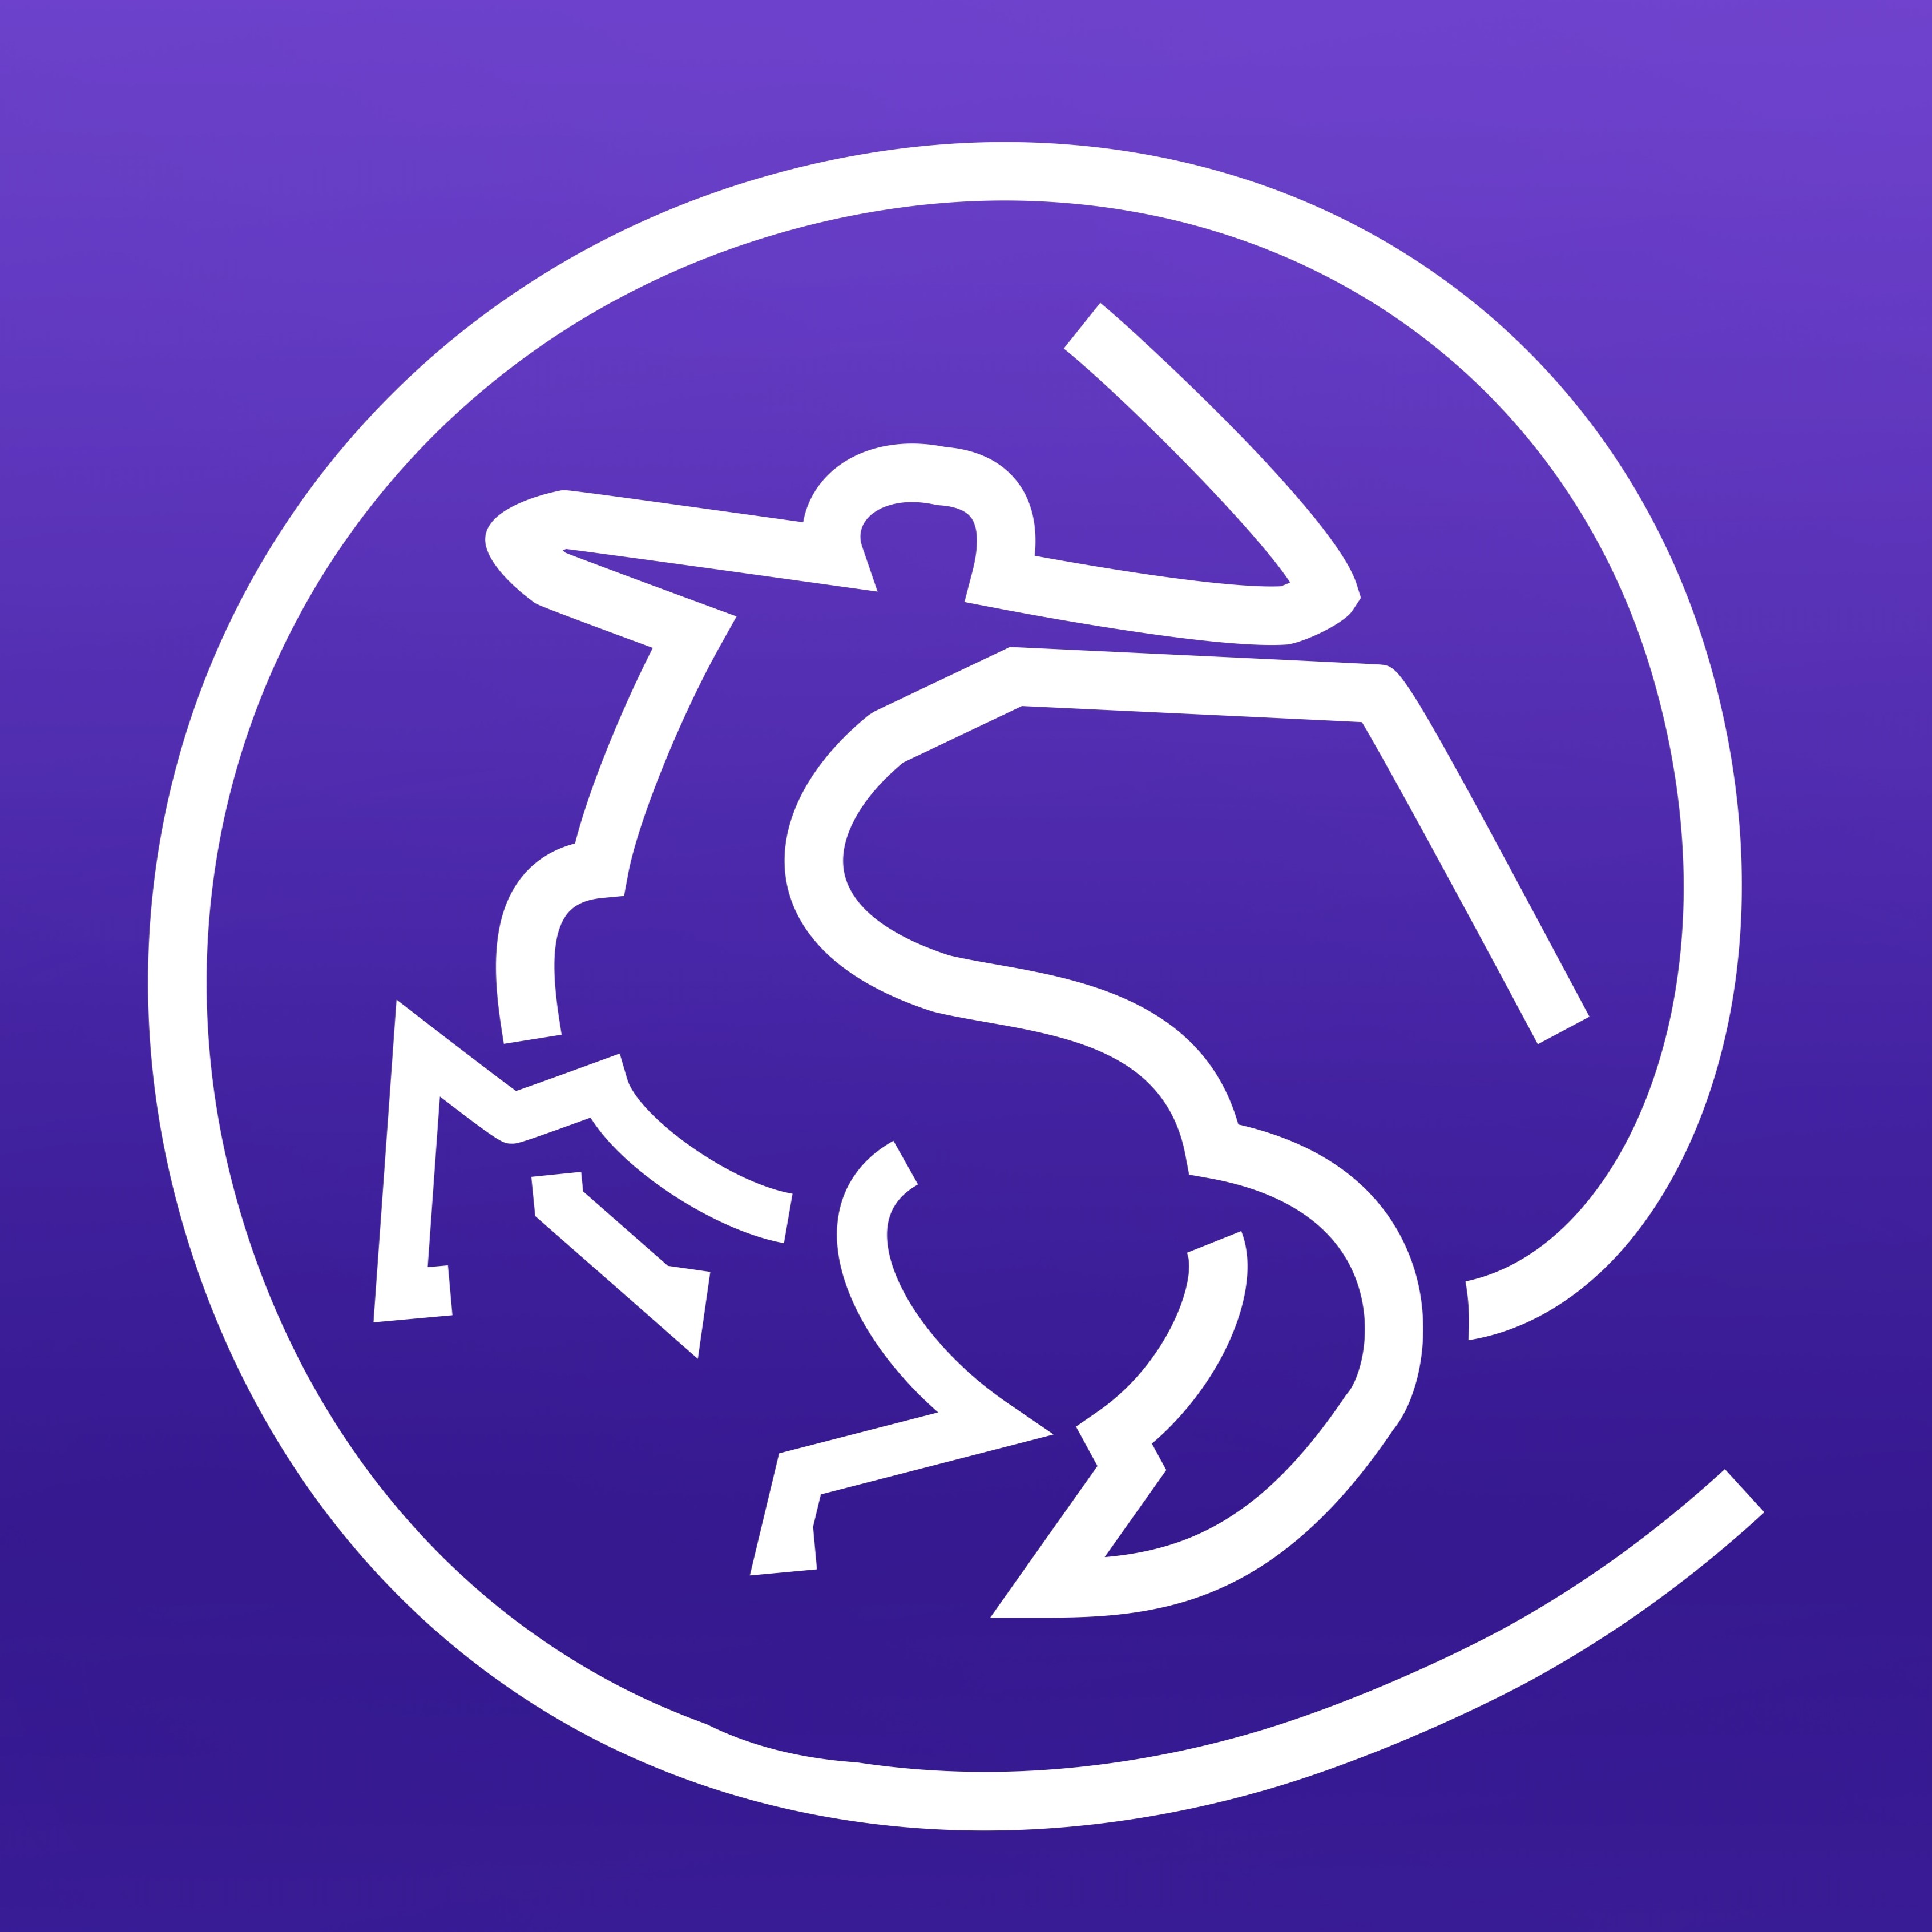 Centaur Foundation for the Performing Arts logo